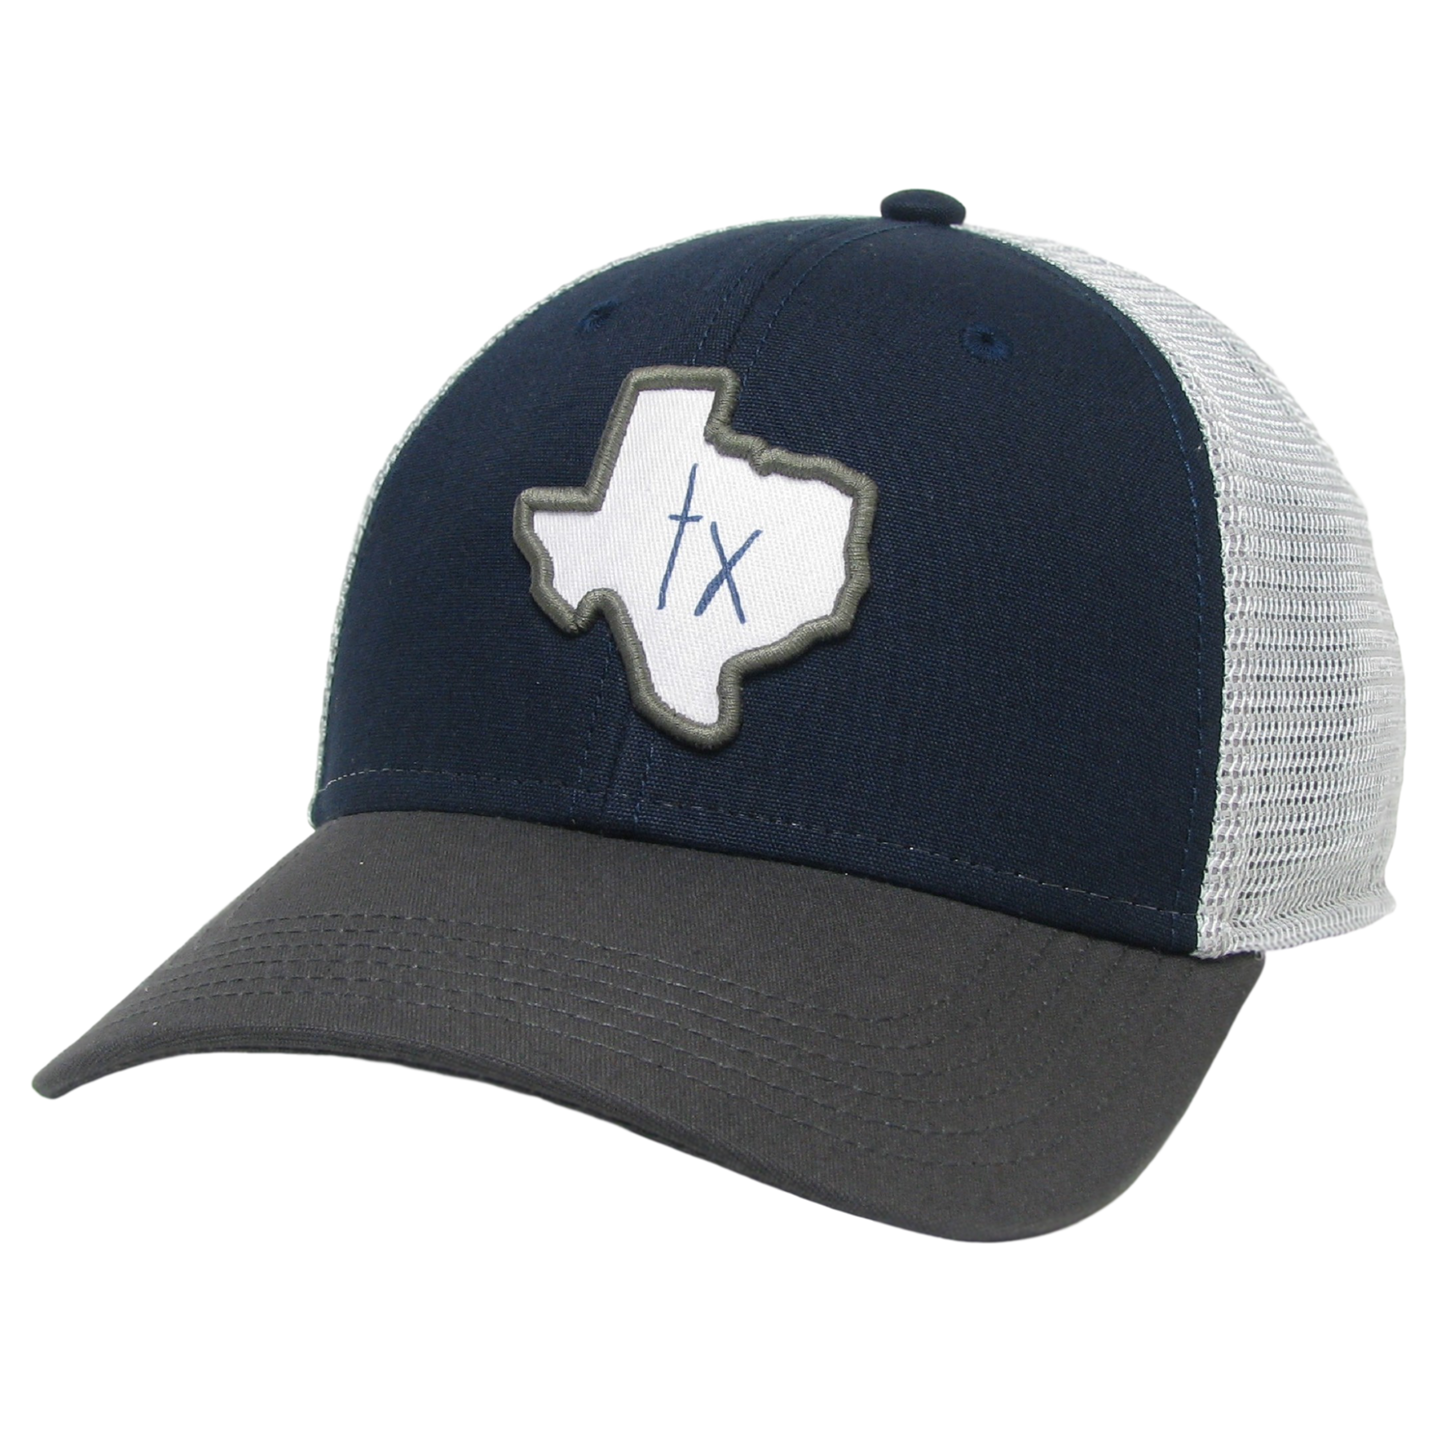 Texas Mid-Pro Trucker Hat in Navy/Dark Grey/Silver